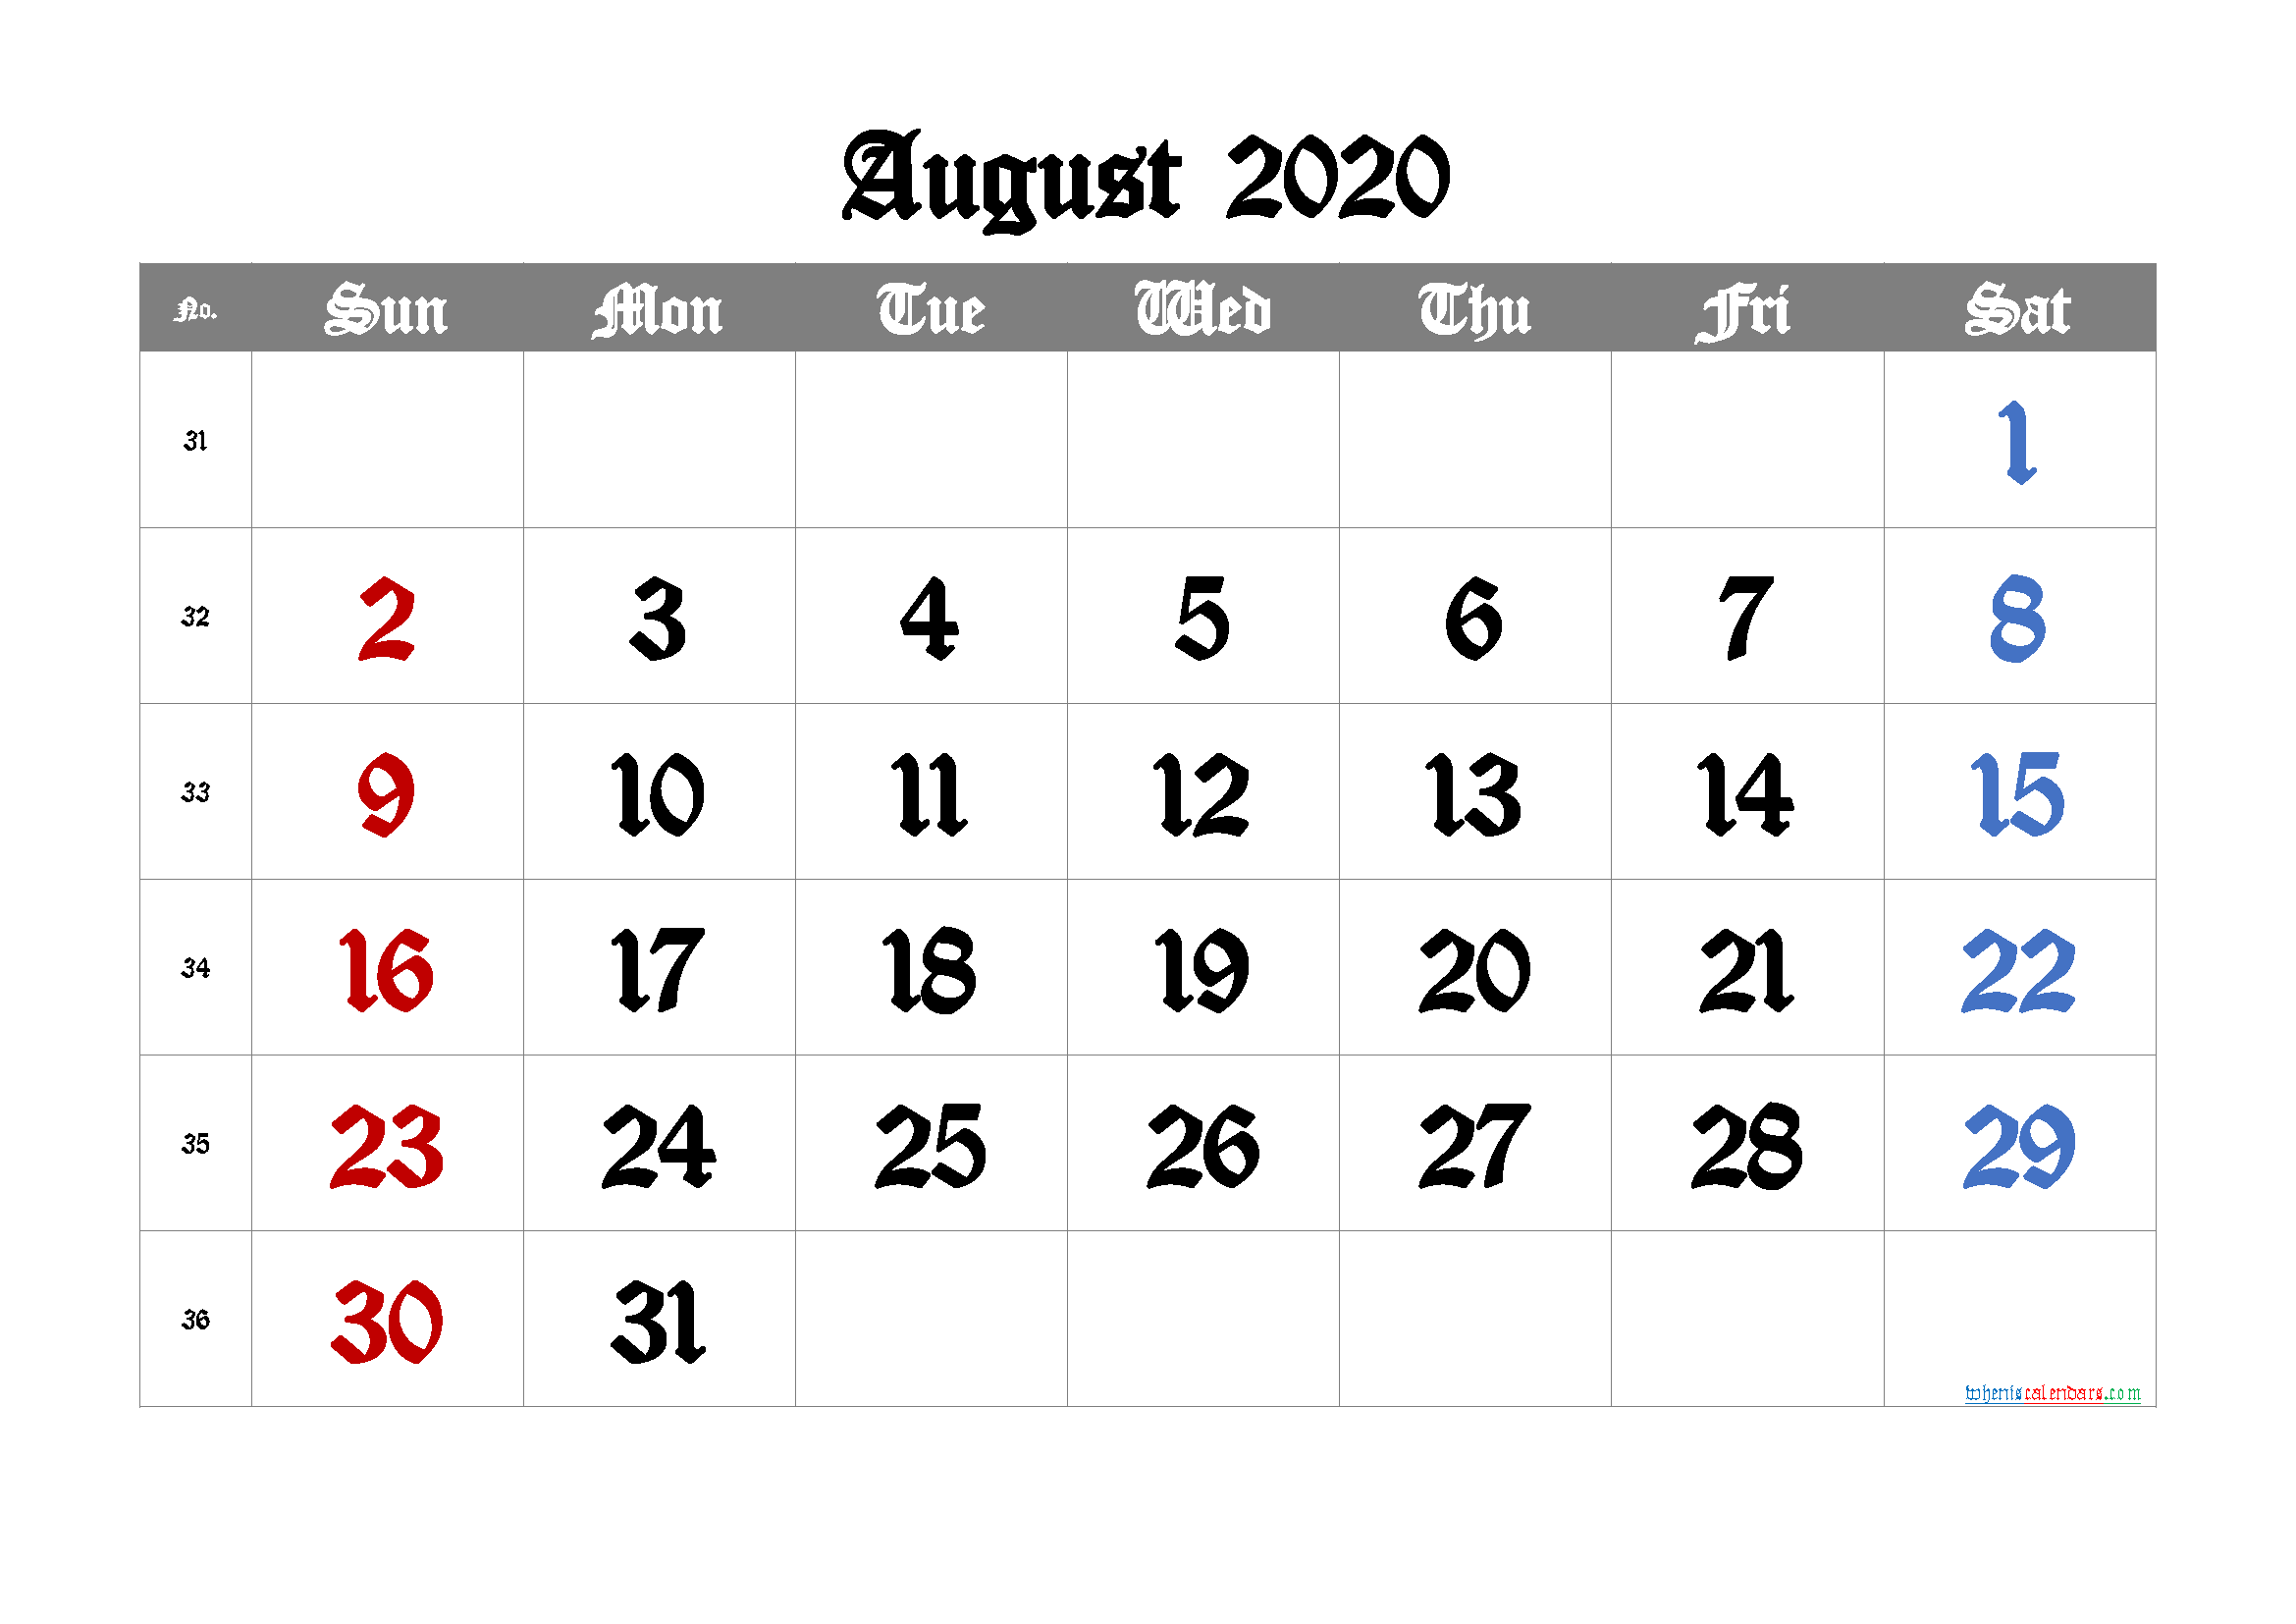 August 2020 Printable Calendar